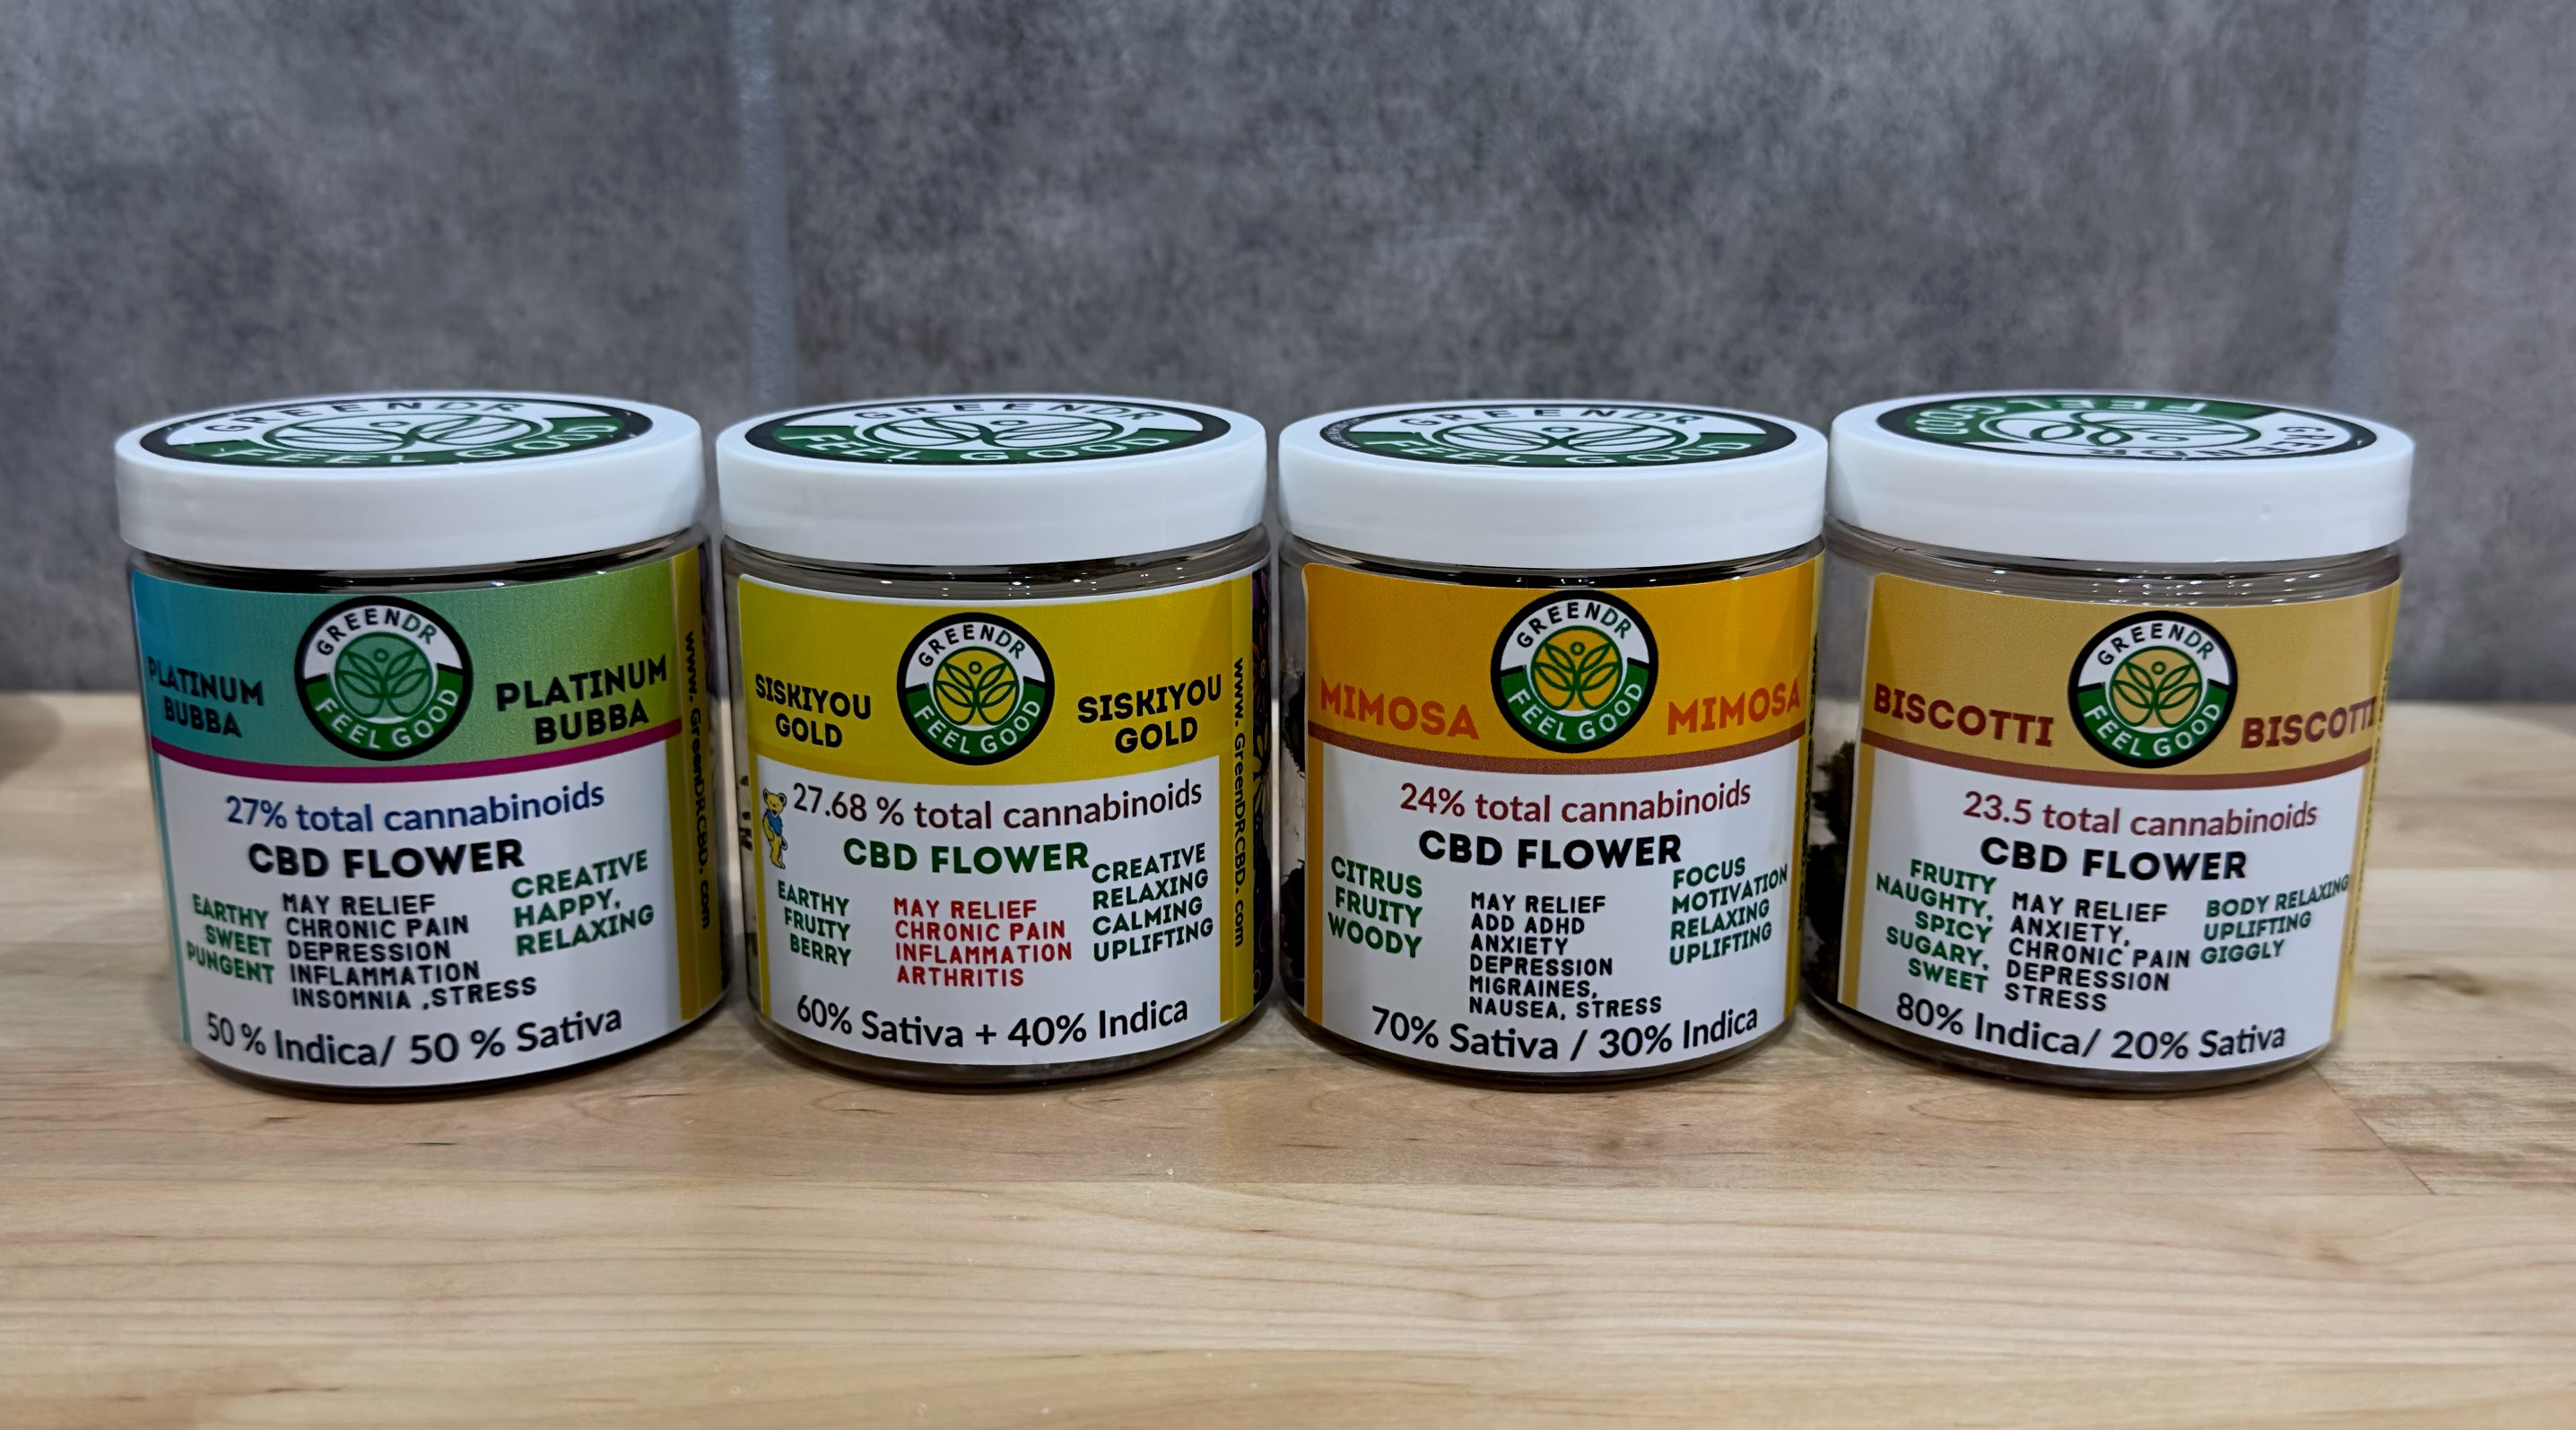 CBD Flower High Potency - The Original Green DR CBD